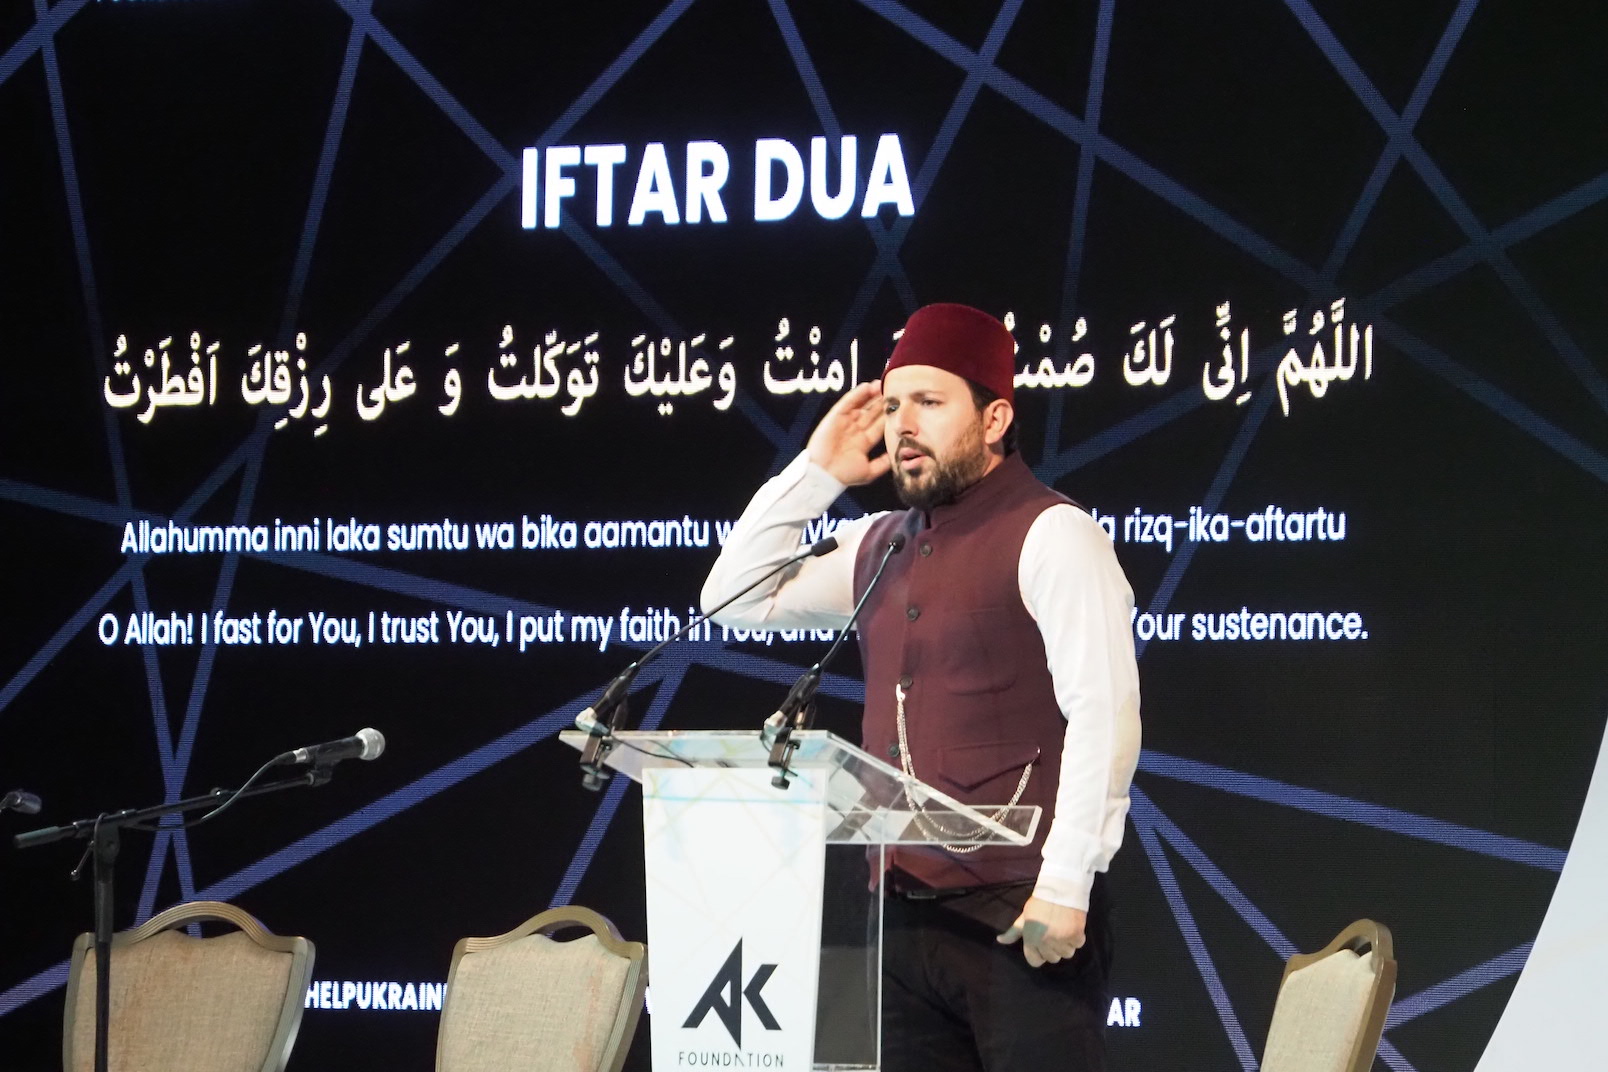 Boxer Amir Khan Raises £3 Million in Iftar for Ukraine - About Islam